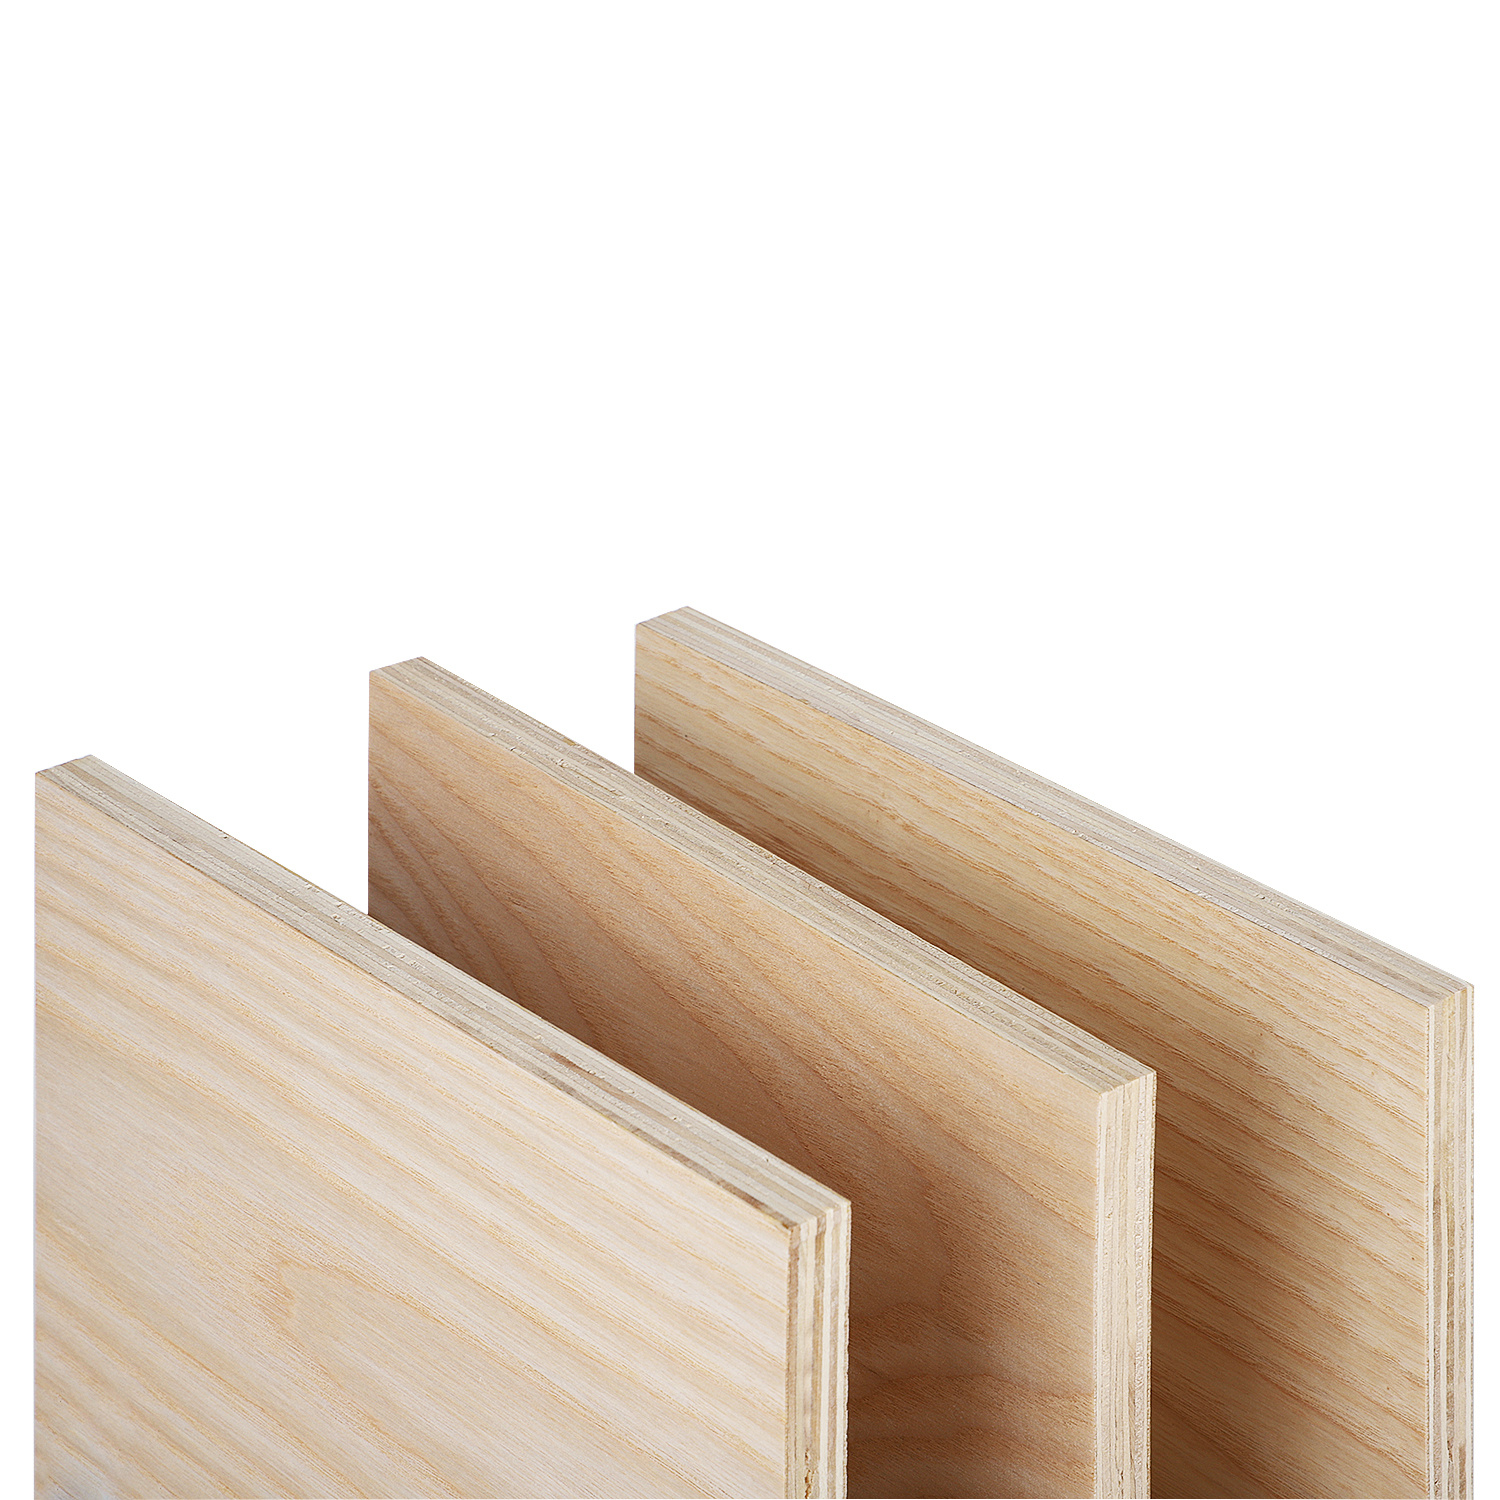 Fancy Woodgrain Plywood Oak Wood Faced Plywood Board for Home Furniture